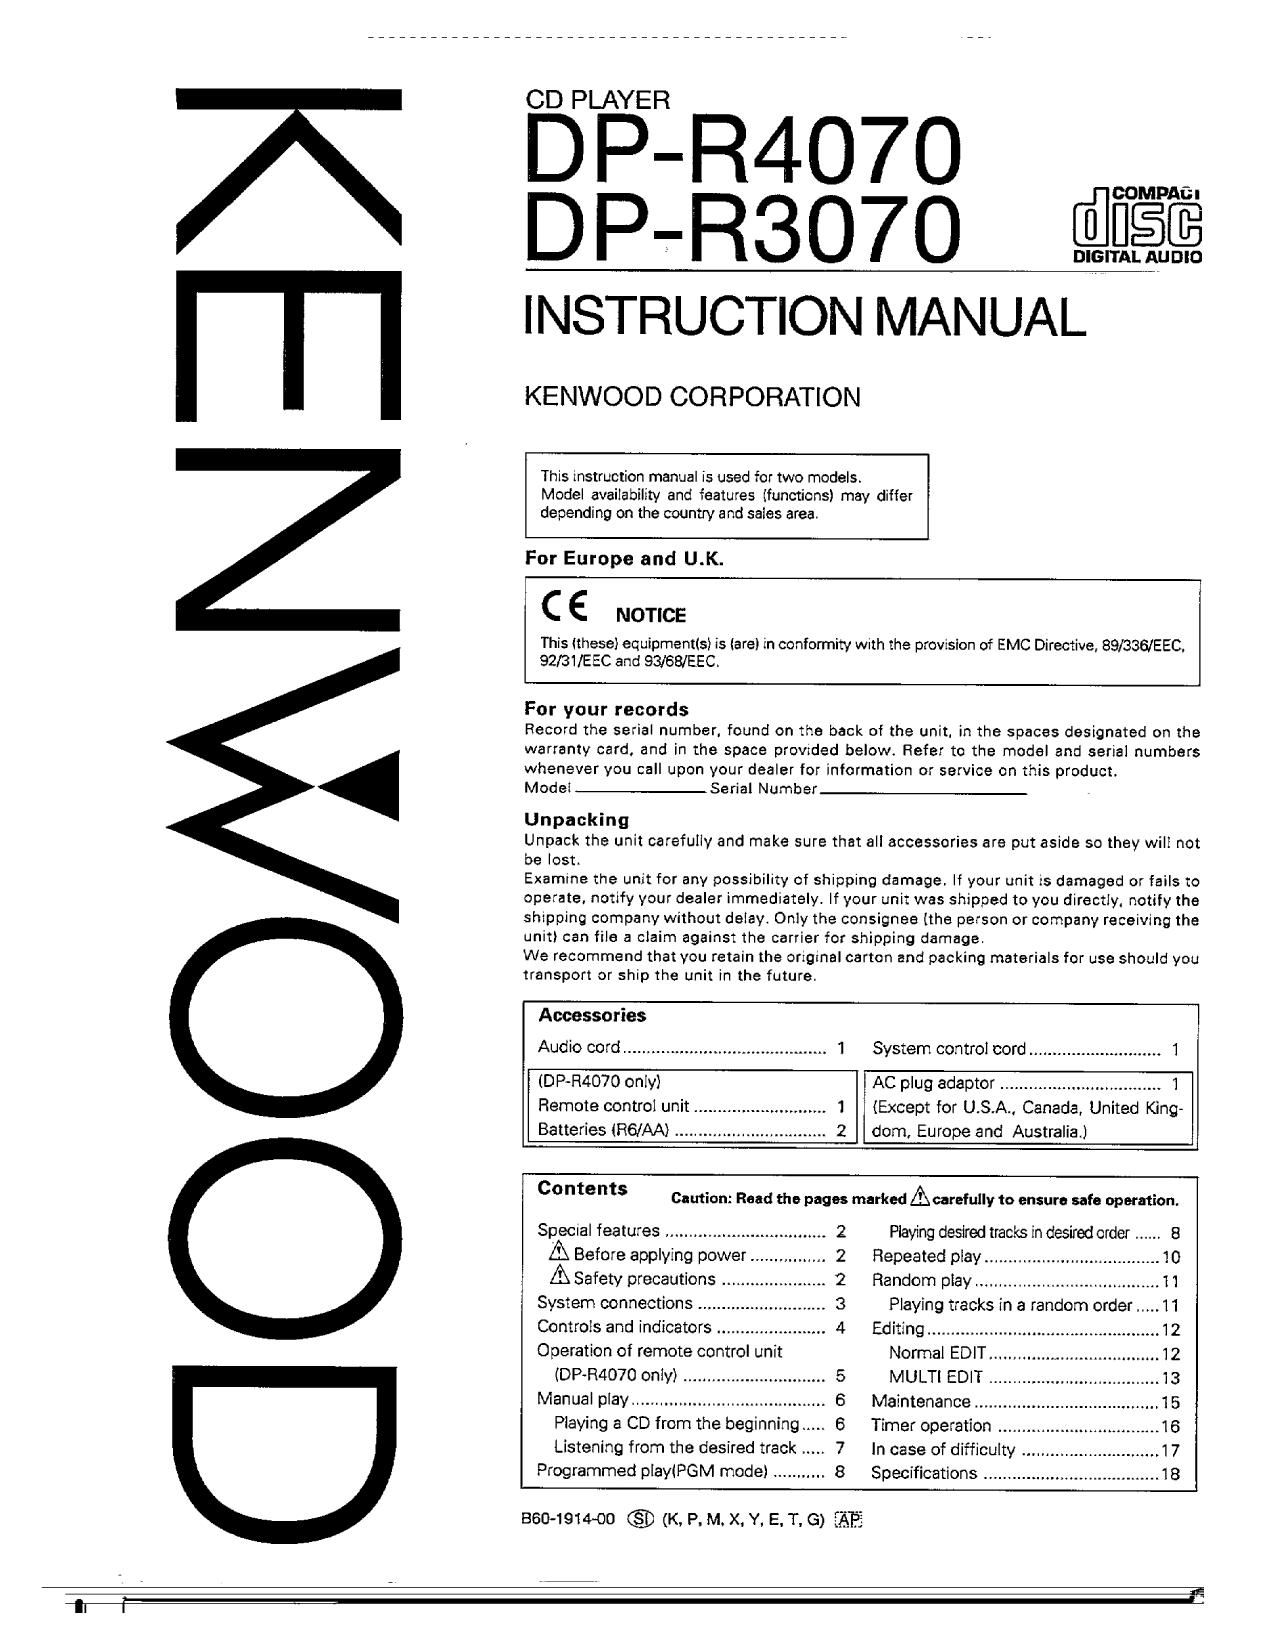 Kenwood DPR 3070 Owners Manual